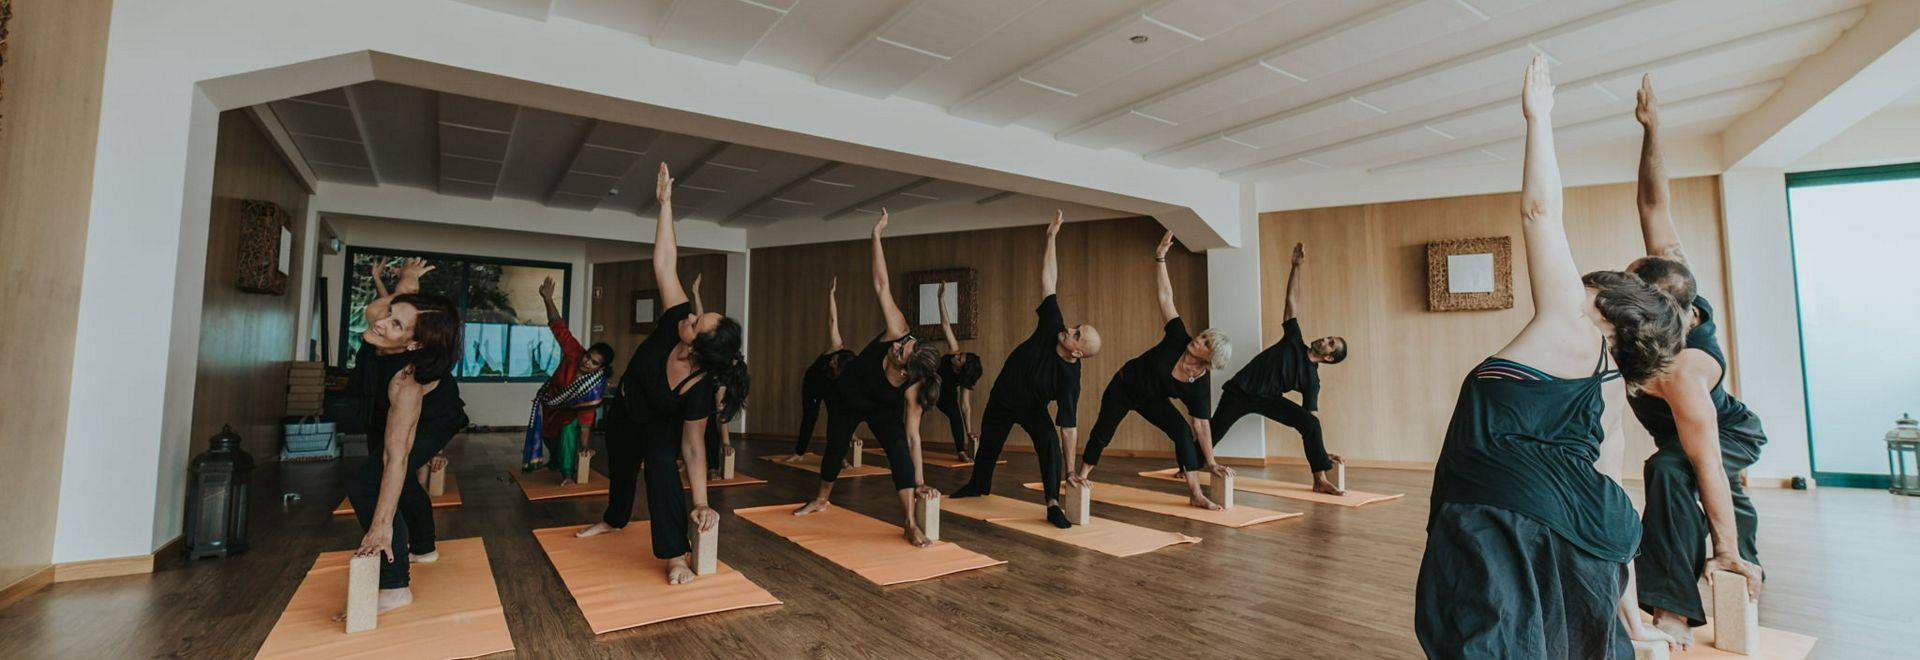 Galo-Resort-yoga-class-2.jpg